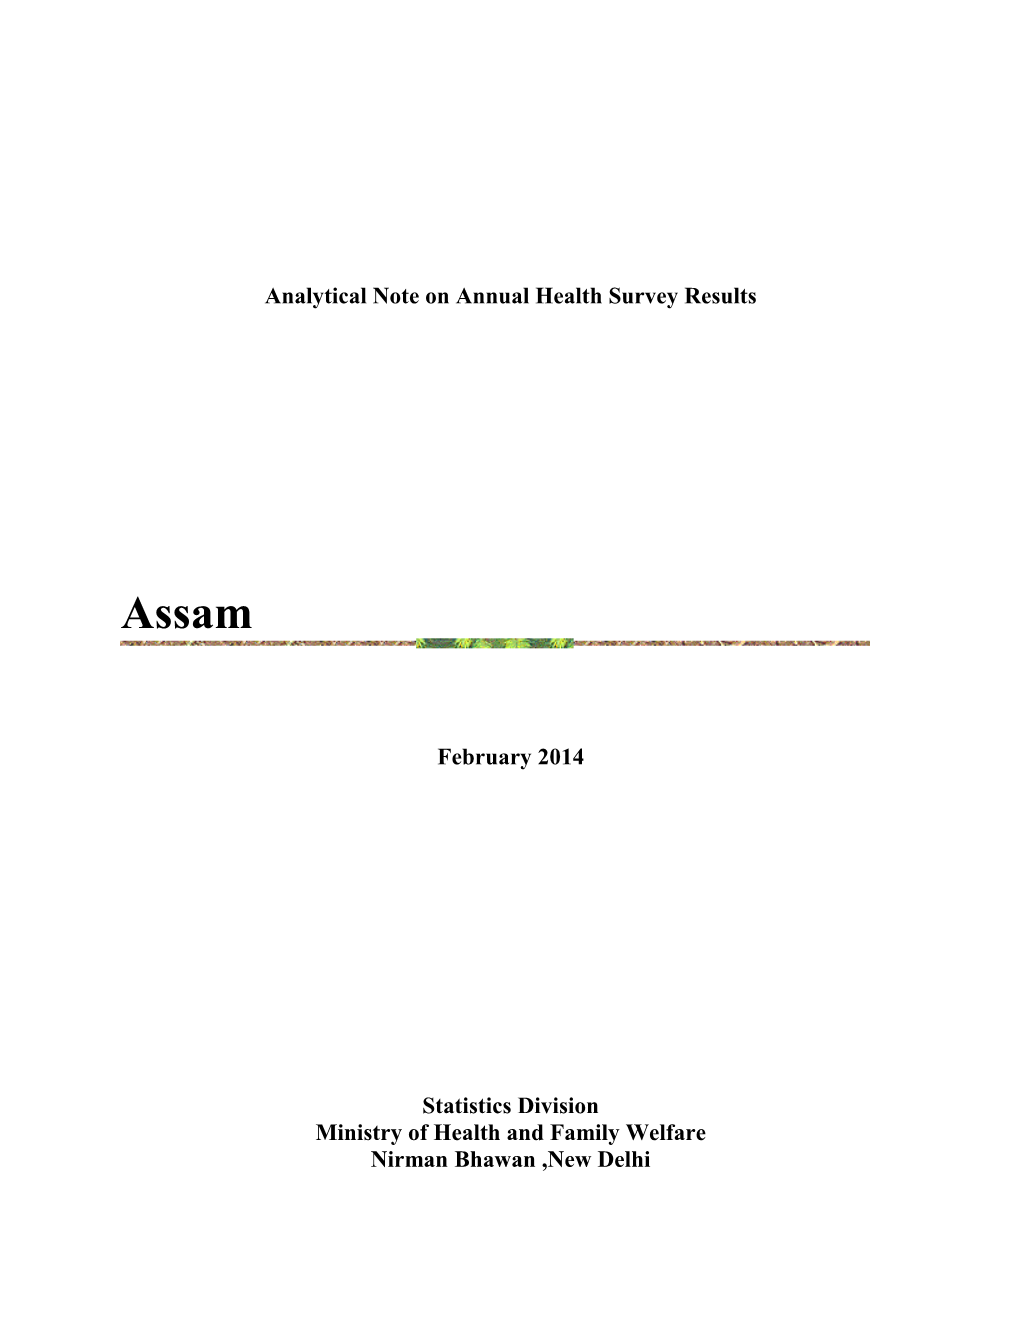 Detailed Note on AHS 2011-12- Assam